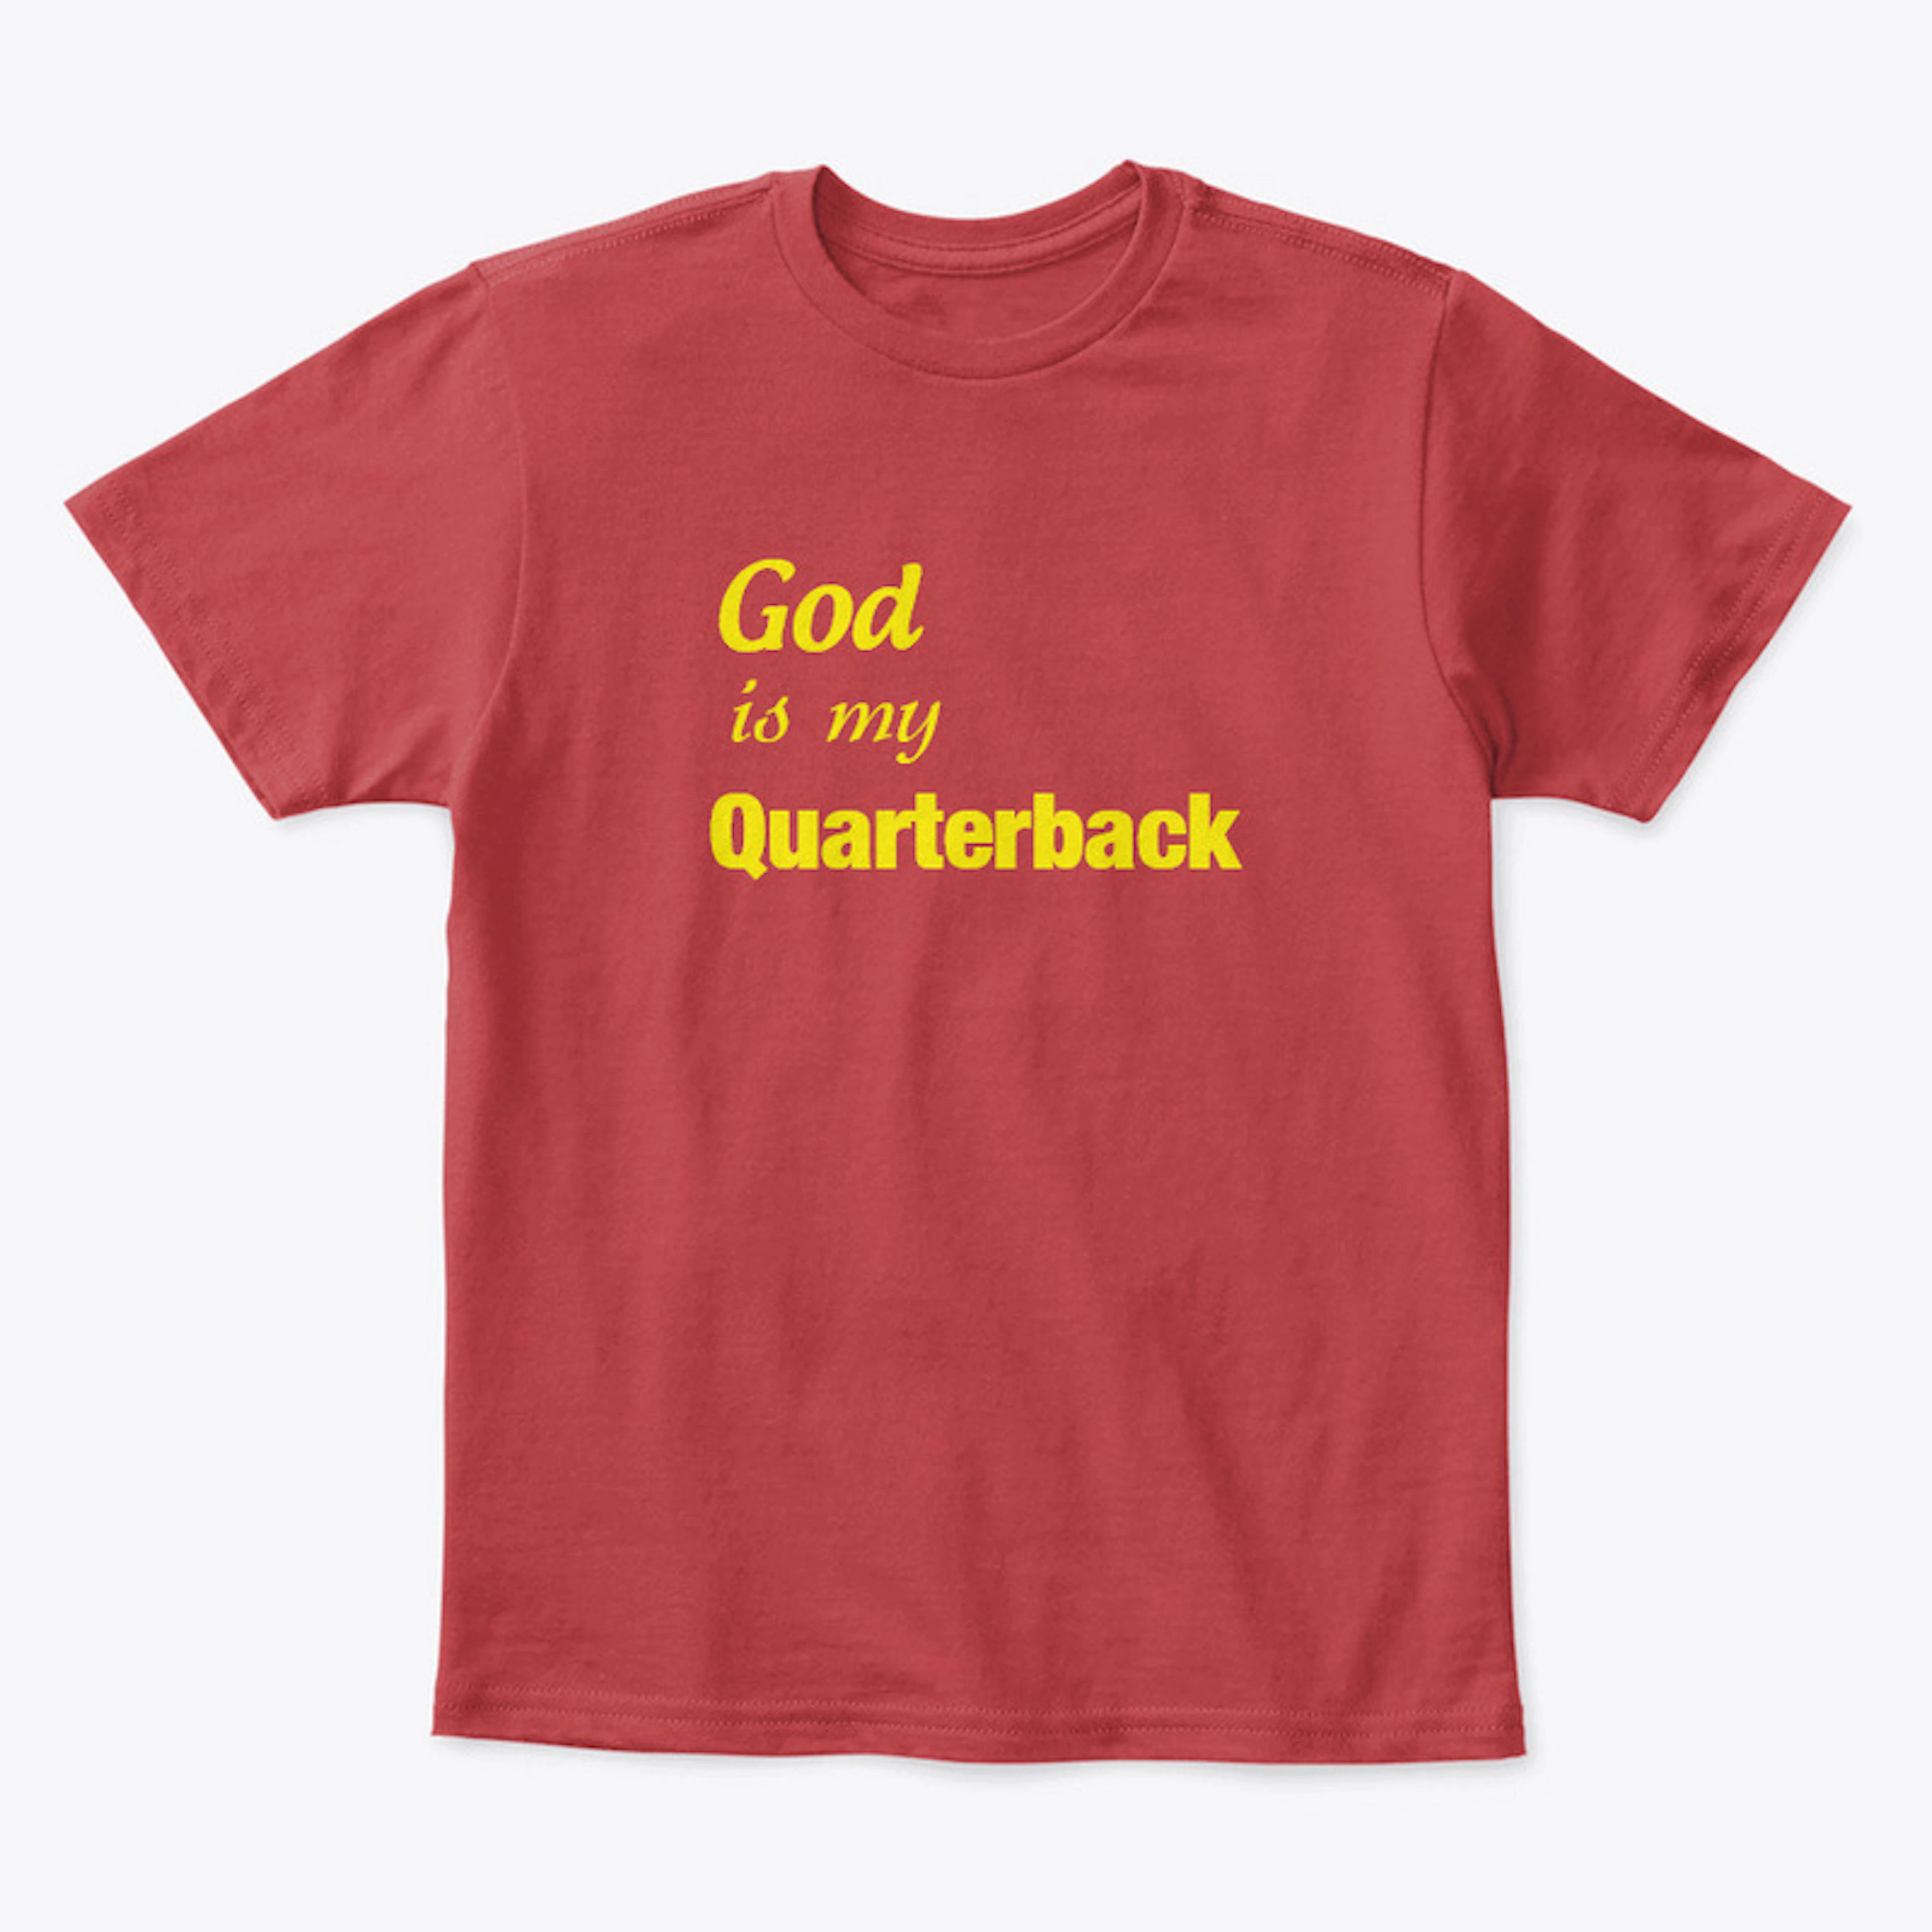 God is my Quarterback